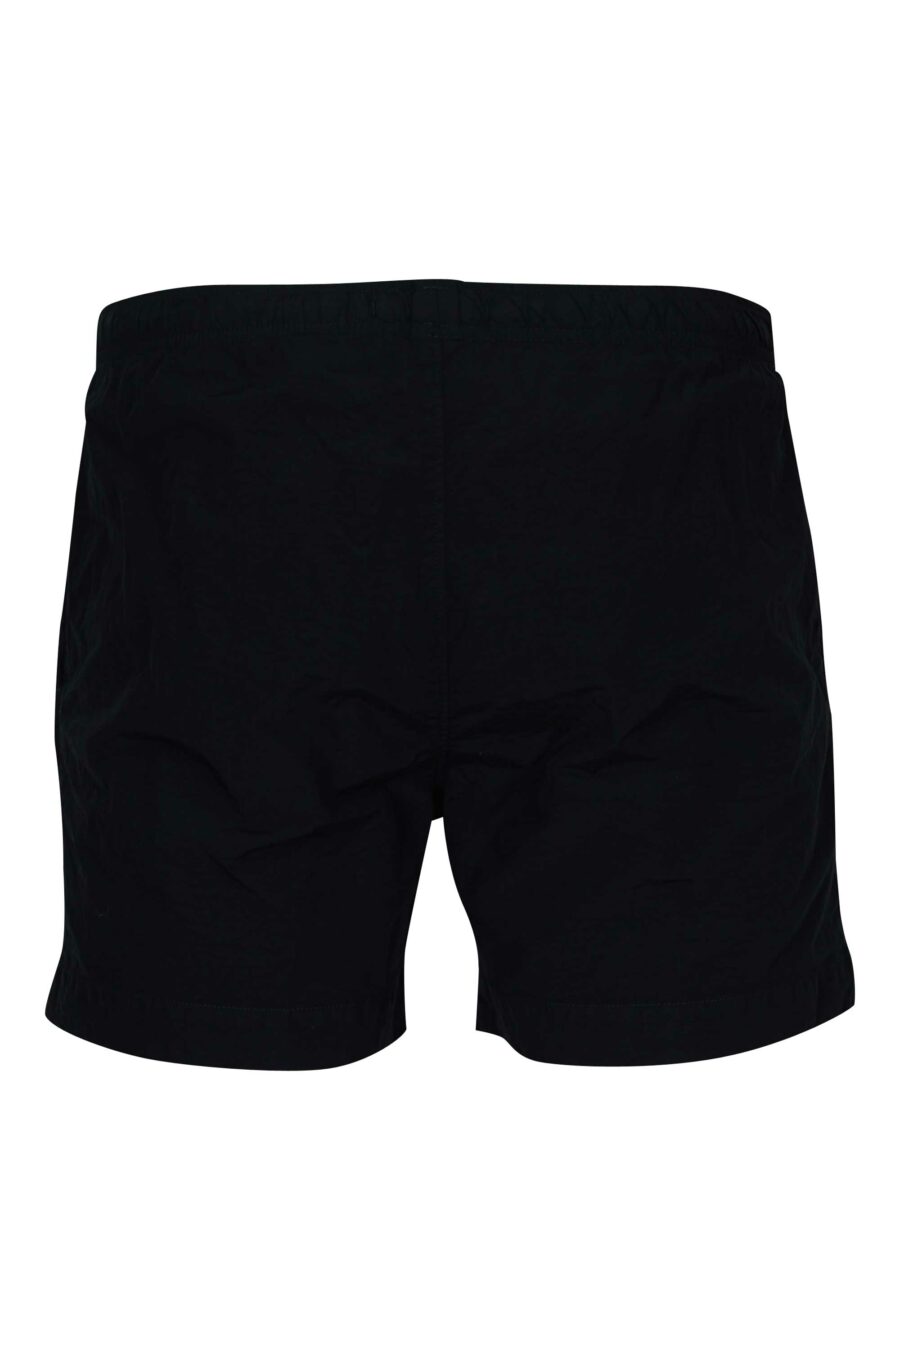 Black swimming costume with mini-logo lens - 7620943790375 1